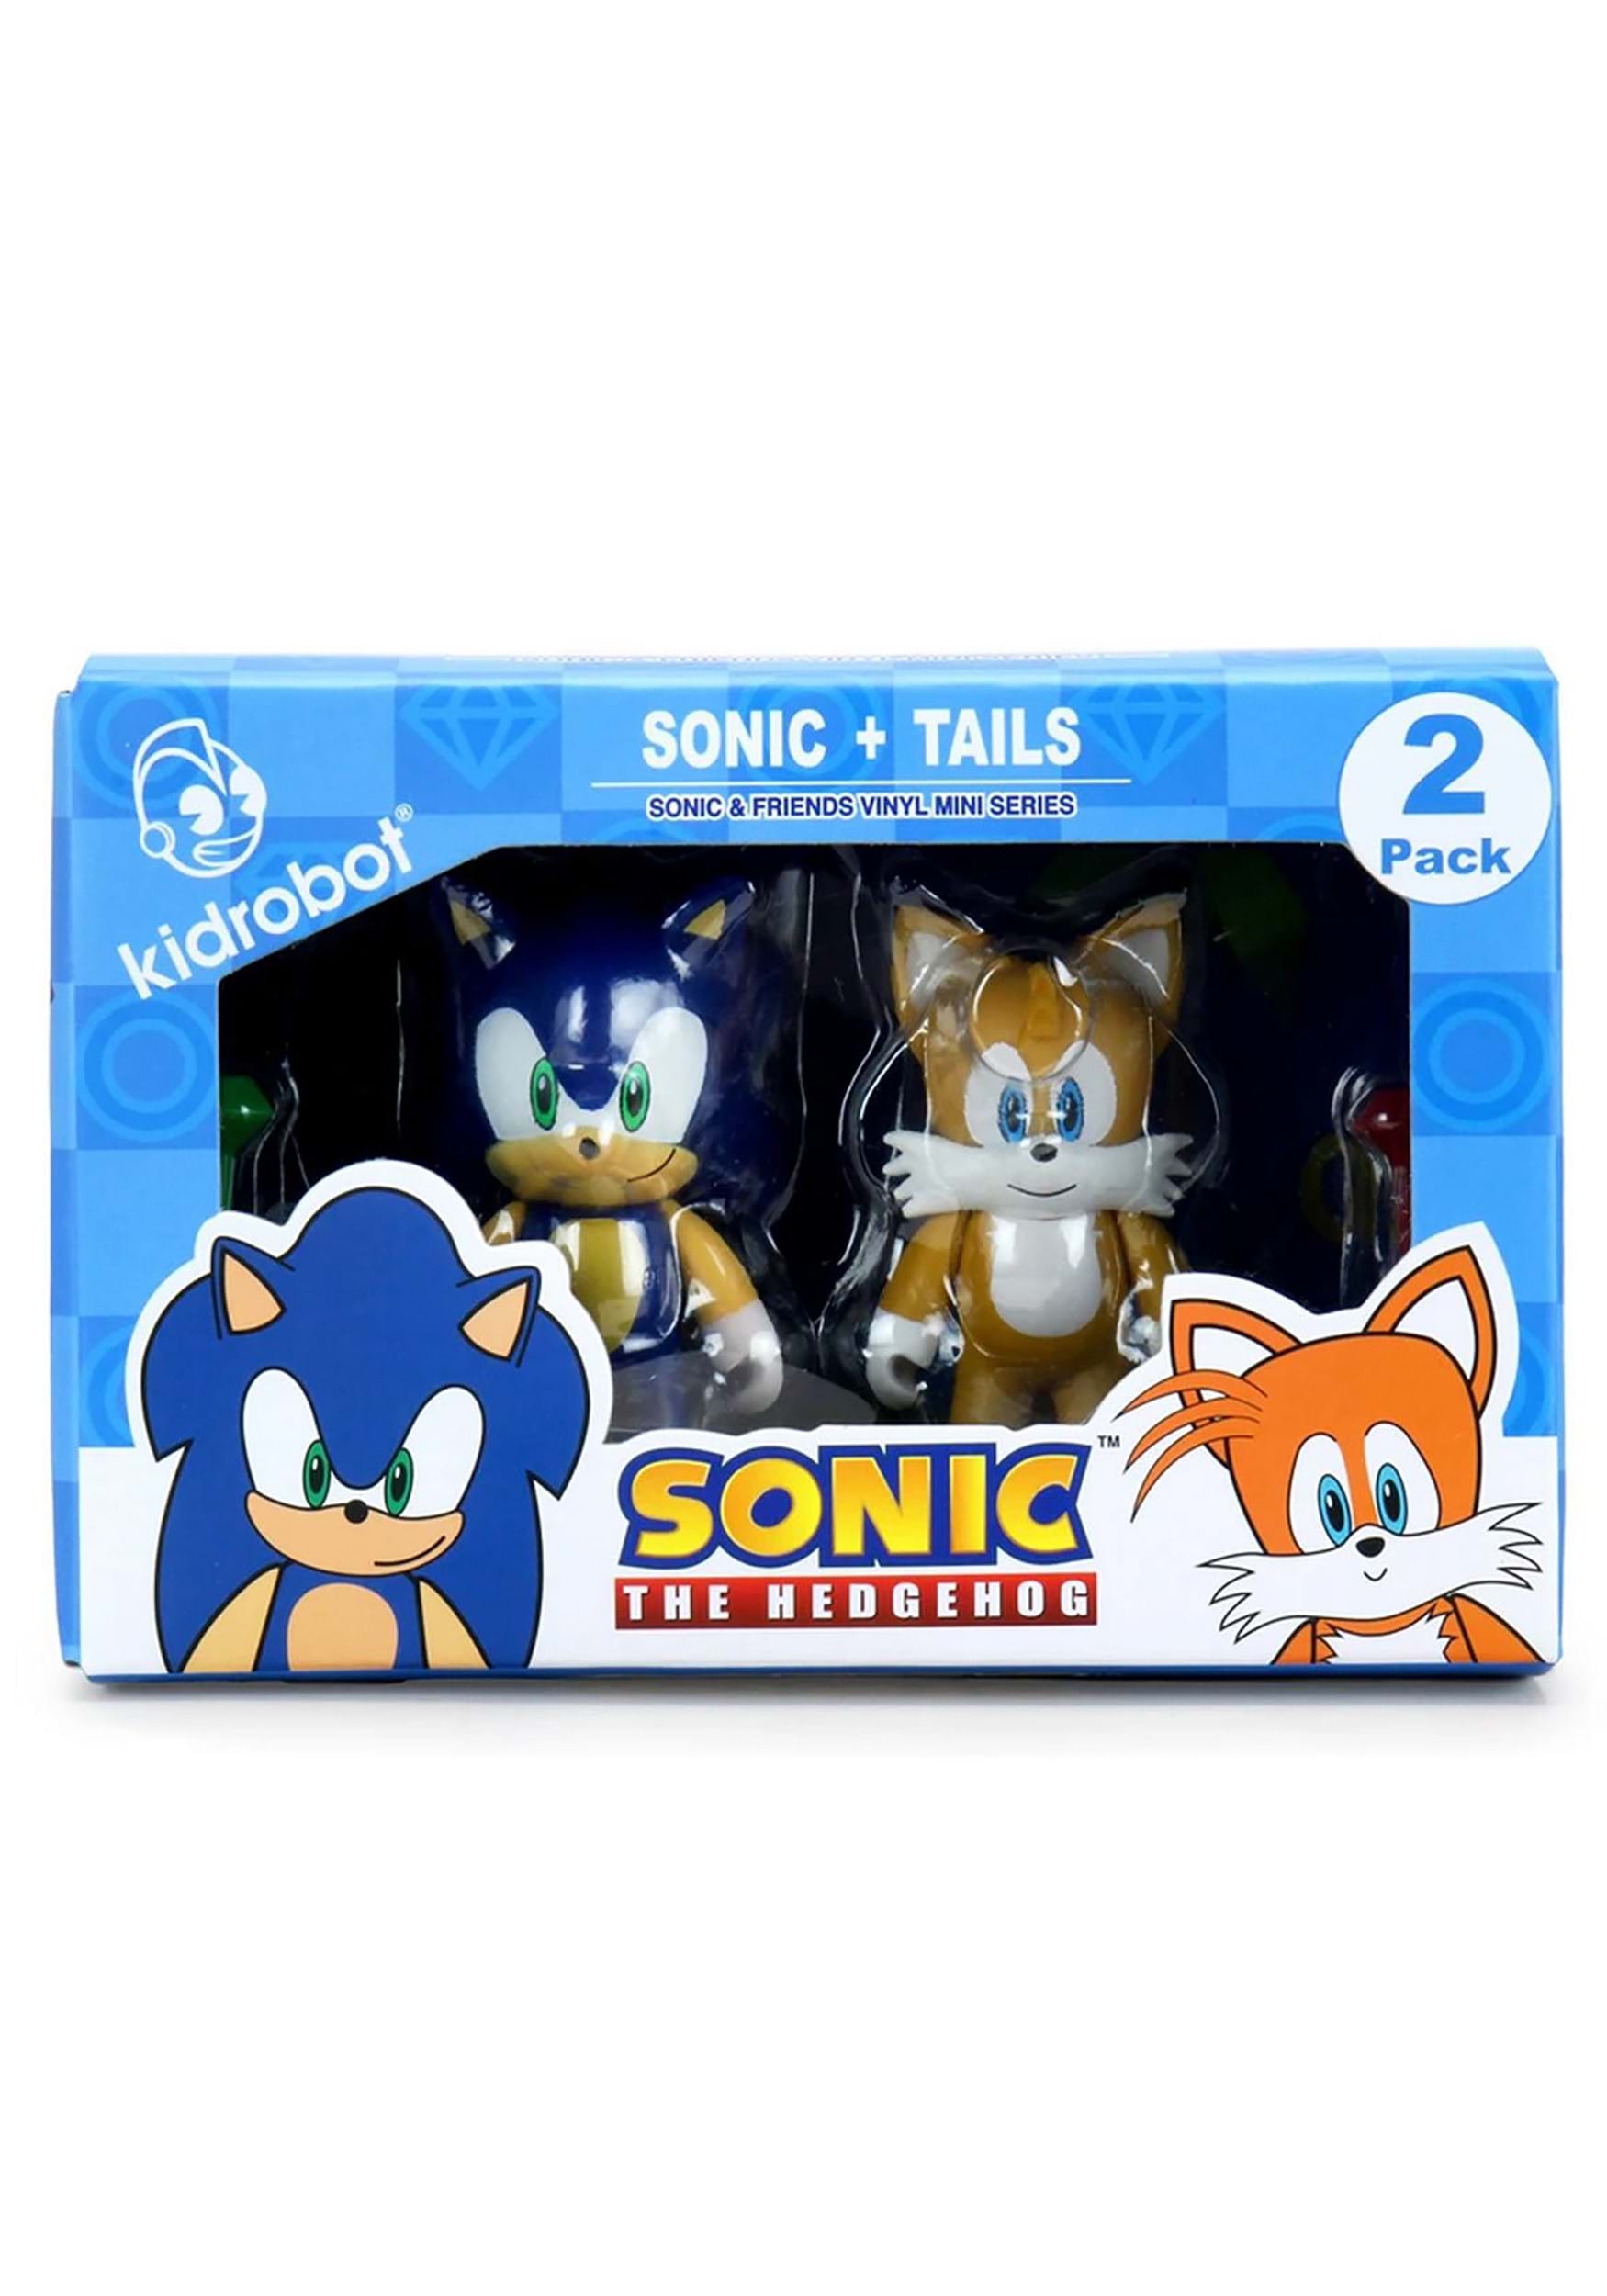 Sonic The Hedgehog 3 Vinyl Figure 2-Pack Sonic & Tails